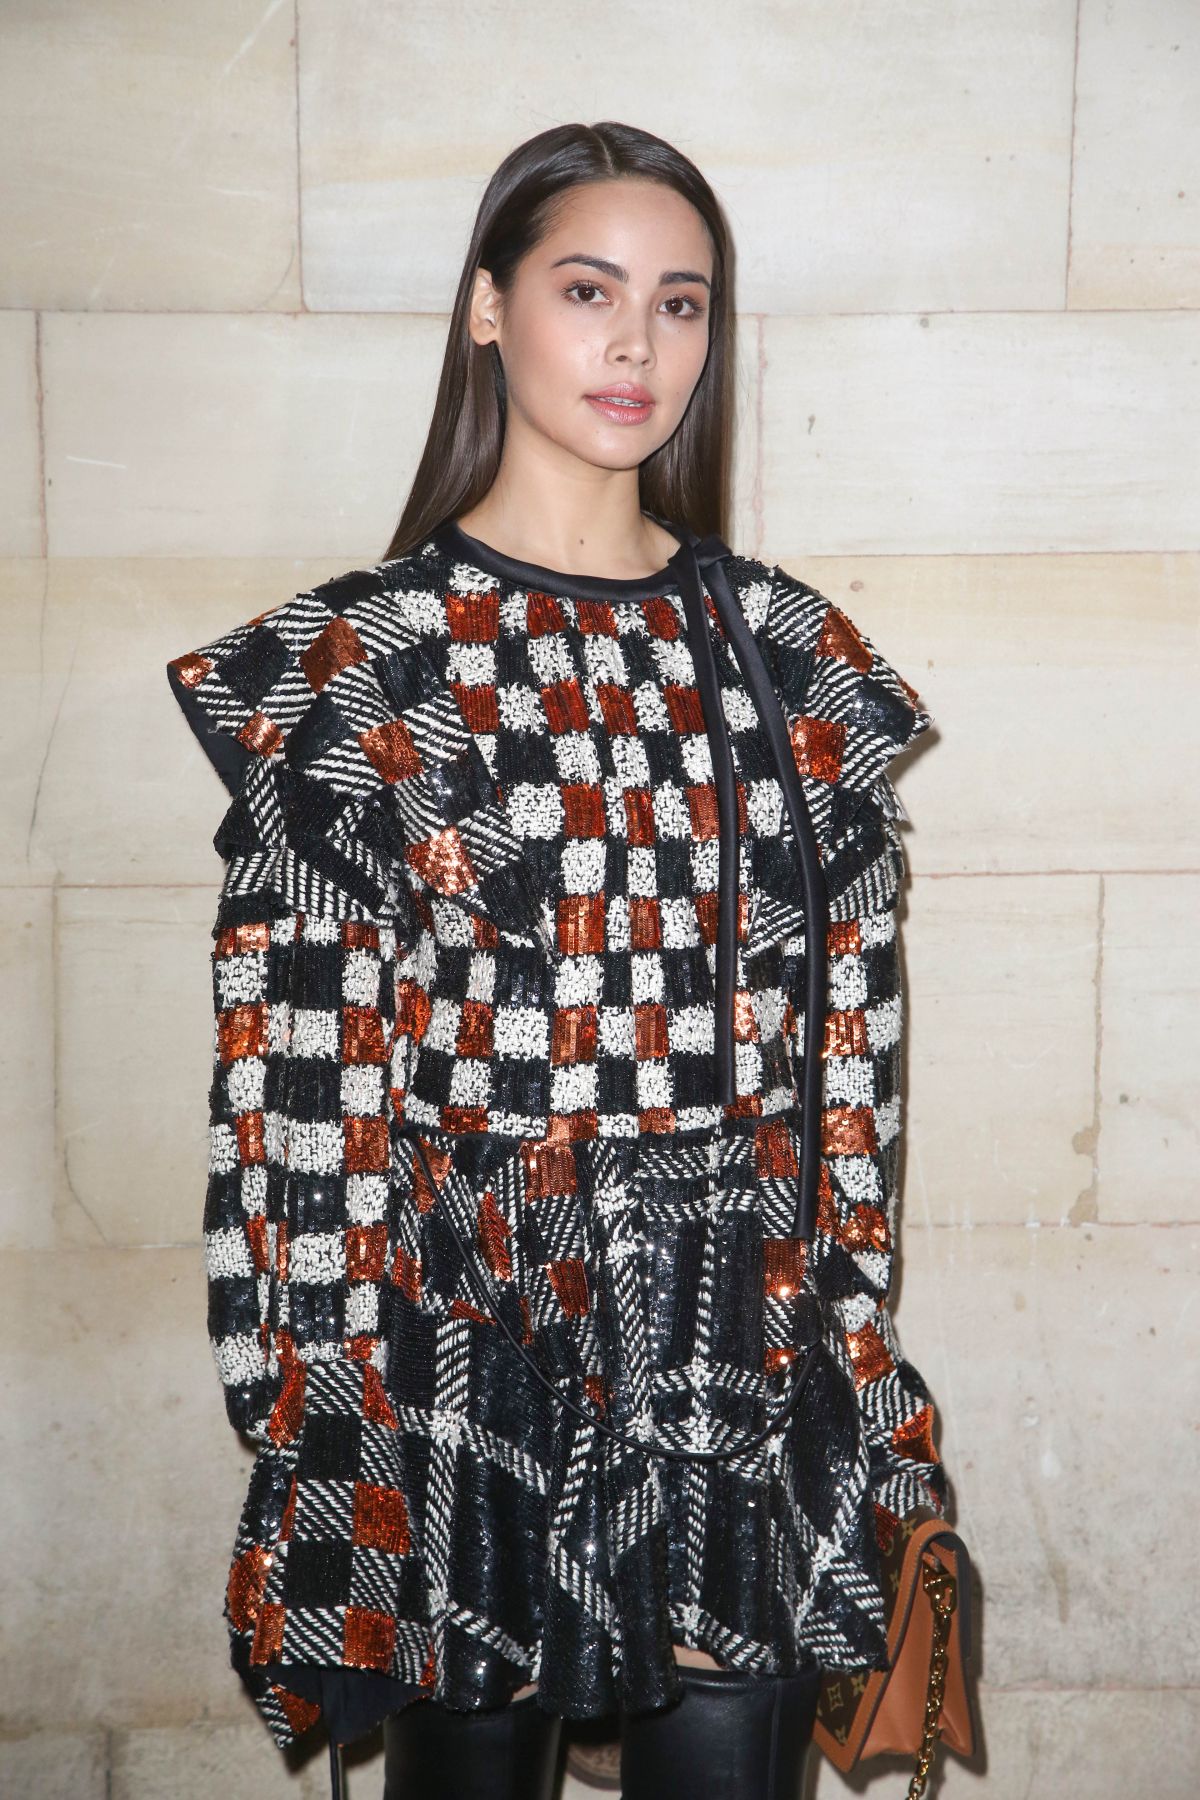 URASSAYA SPERBUND at Louis Vuitton Show at Paris Fashion Week 10/02/2018 – HawtCelebs